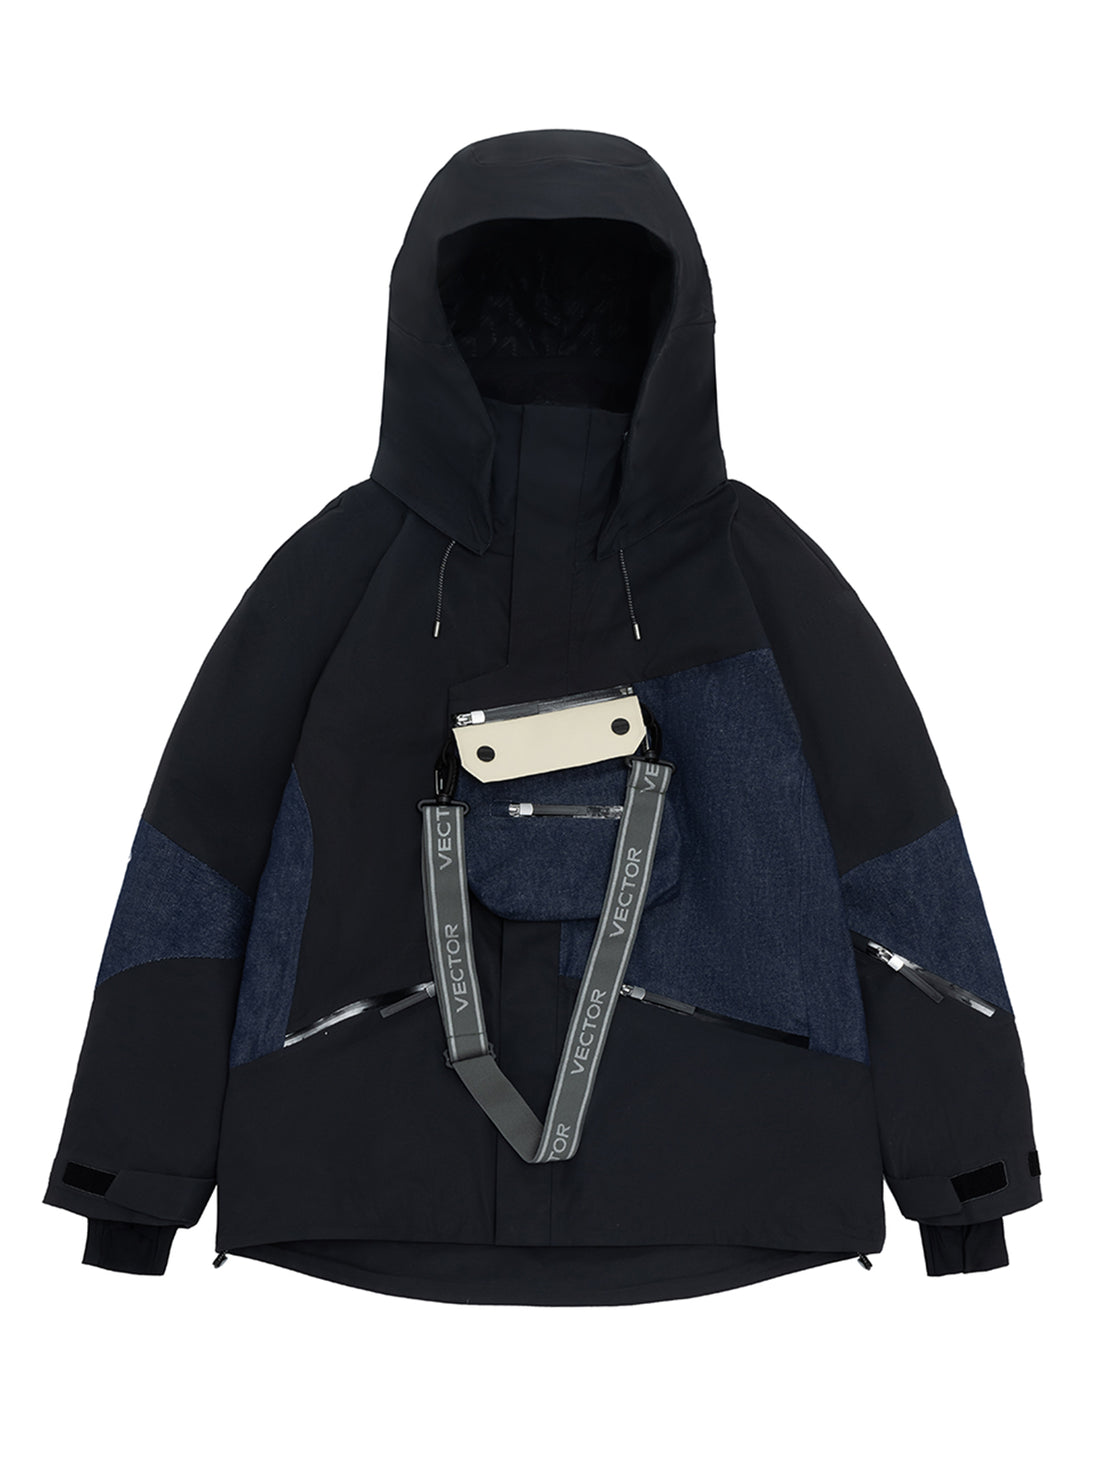 Men's 3L Snowpark Insulated Detachable Pocket Jacket